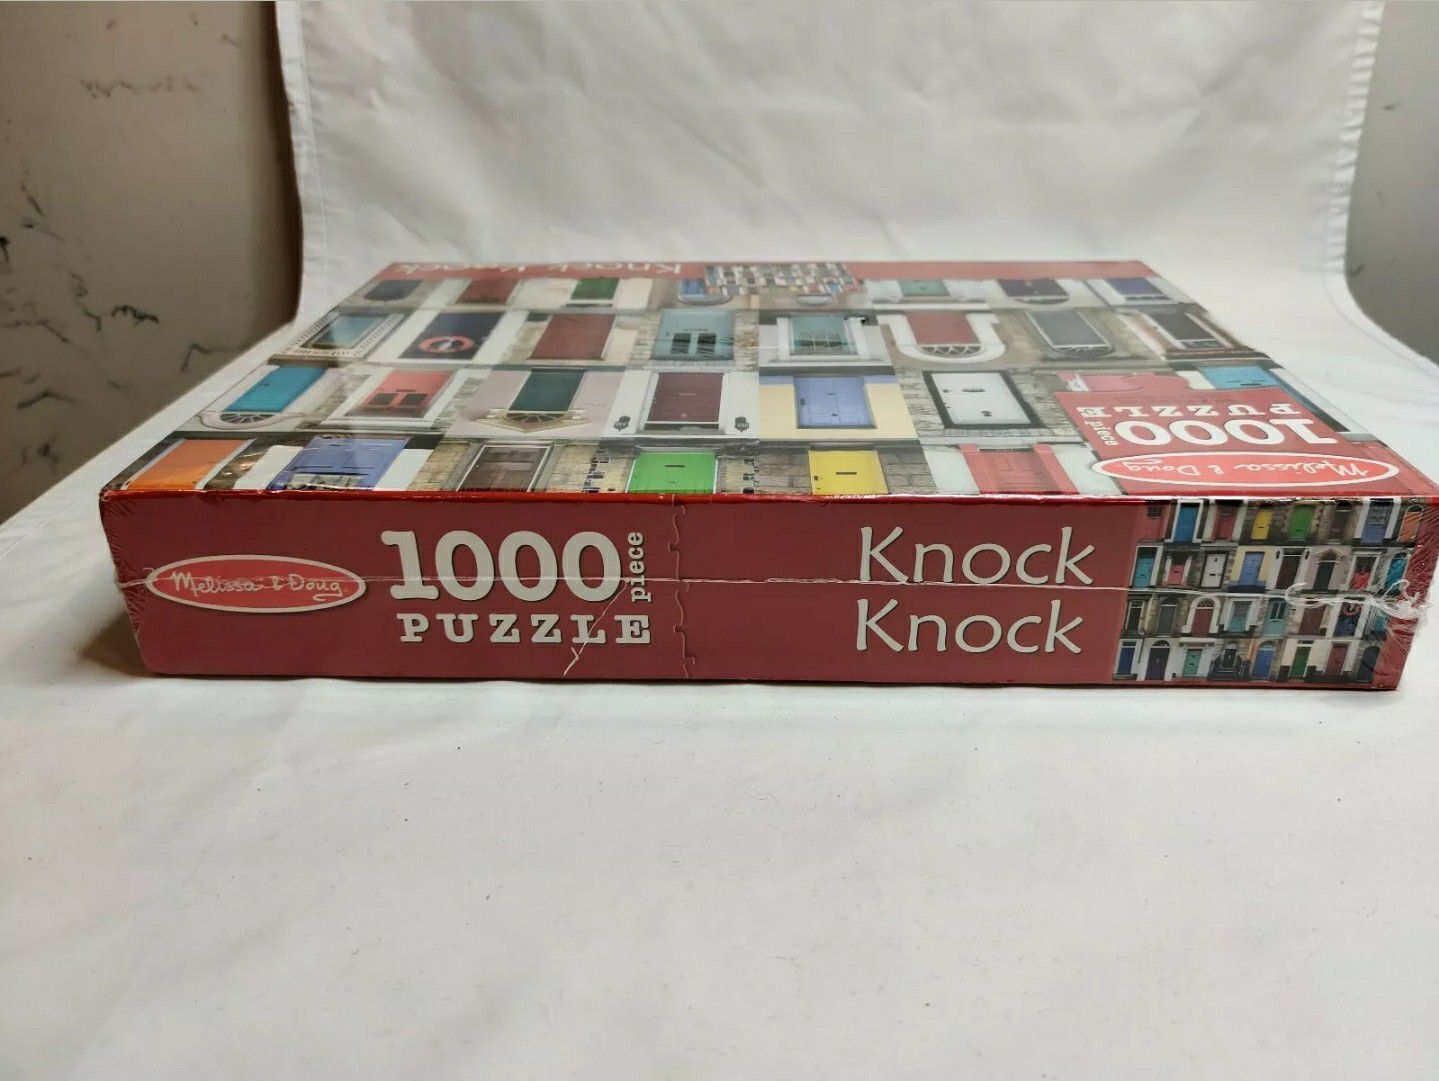  Melissa & Doug 1,000-Piece Knock Knock Doorways Jigsaw Puzzle  (29 x 23 inches) : Melissa & Doug: Toys & Games